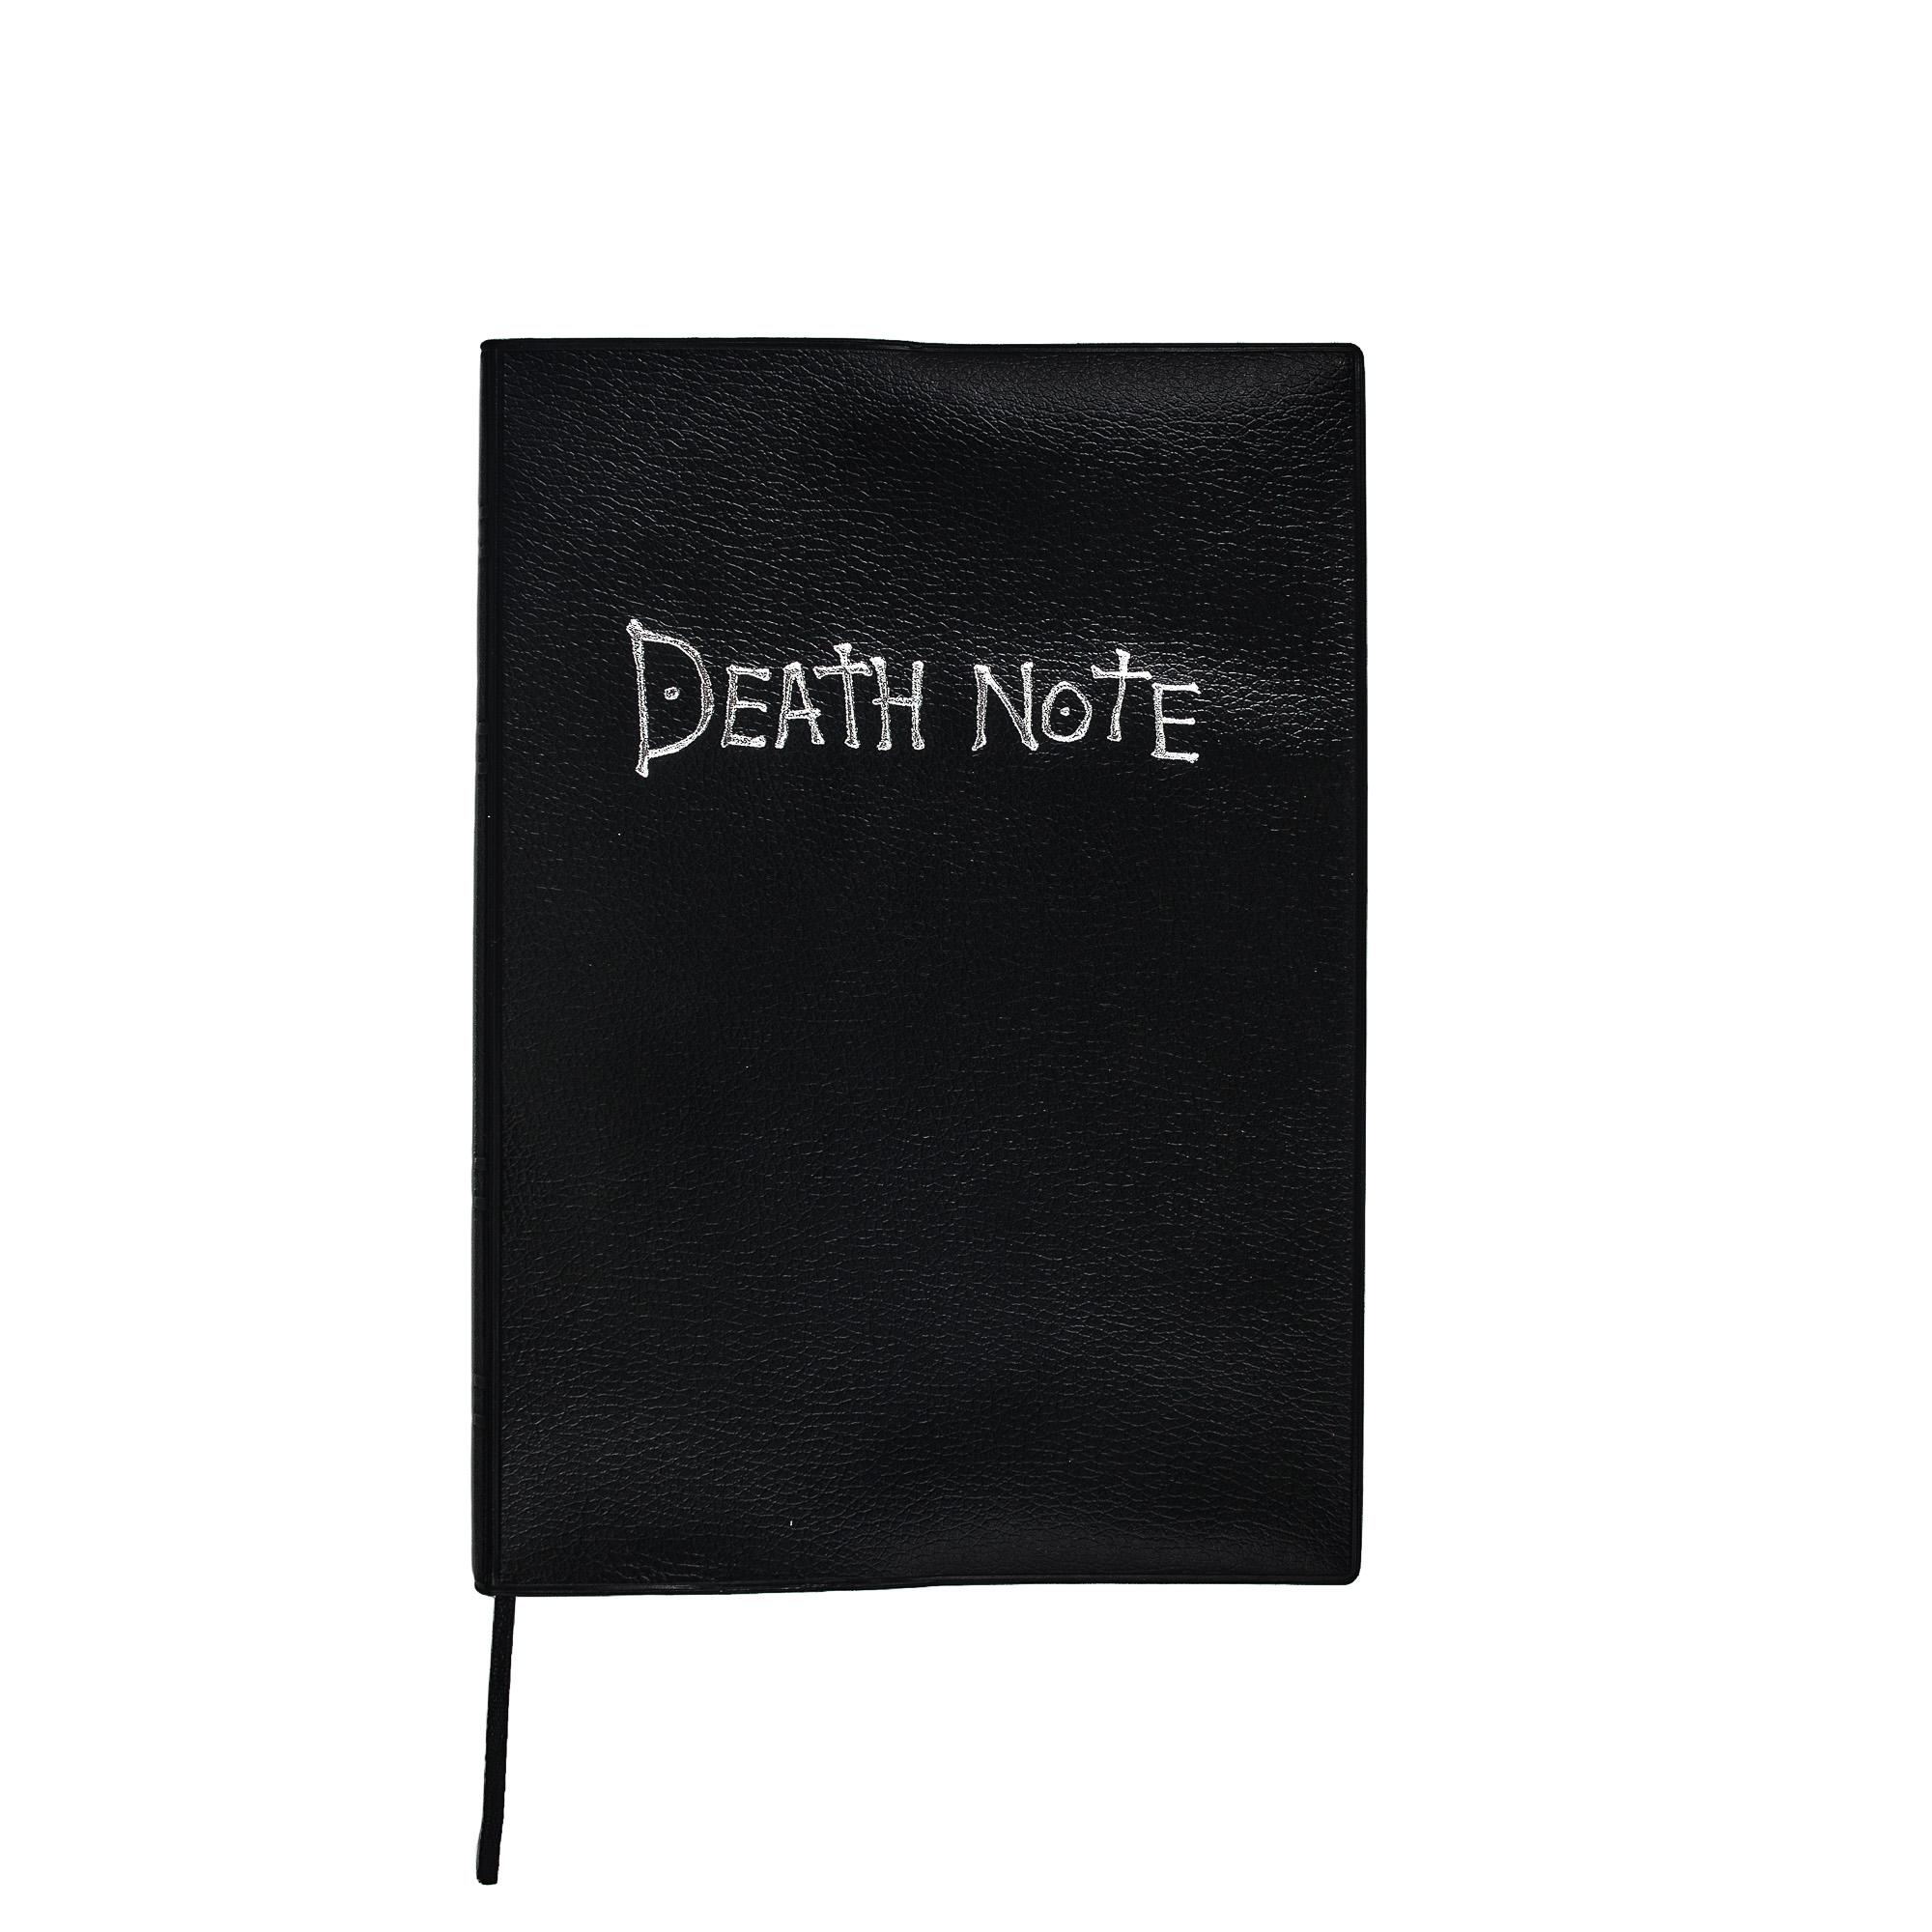 G2G สมุดปกหนัง ลายเดธโน๊ต Death Note สำหรับจดบันทึก สีดำ จำนวน 1 ชิ้น